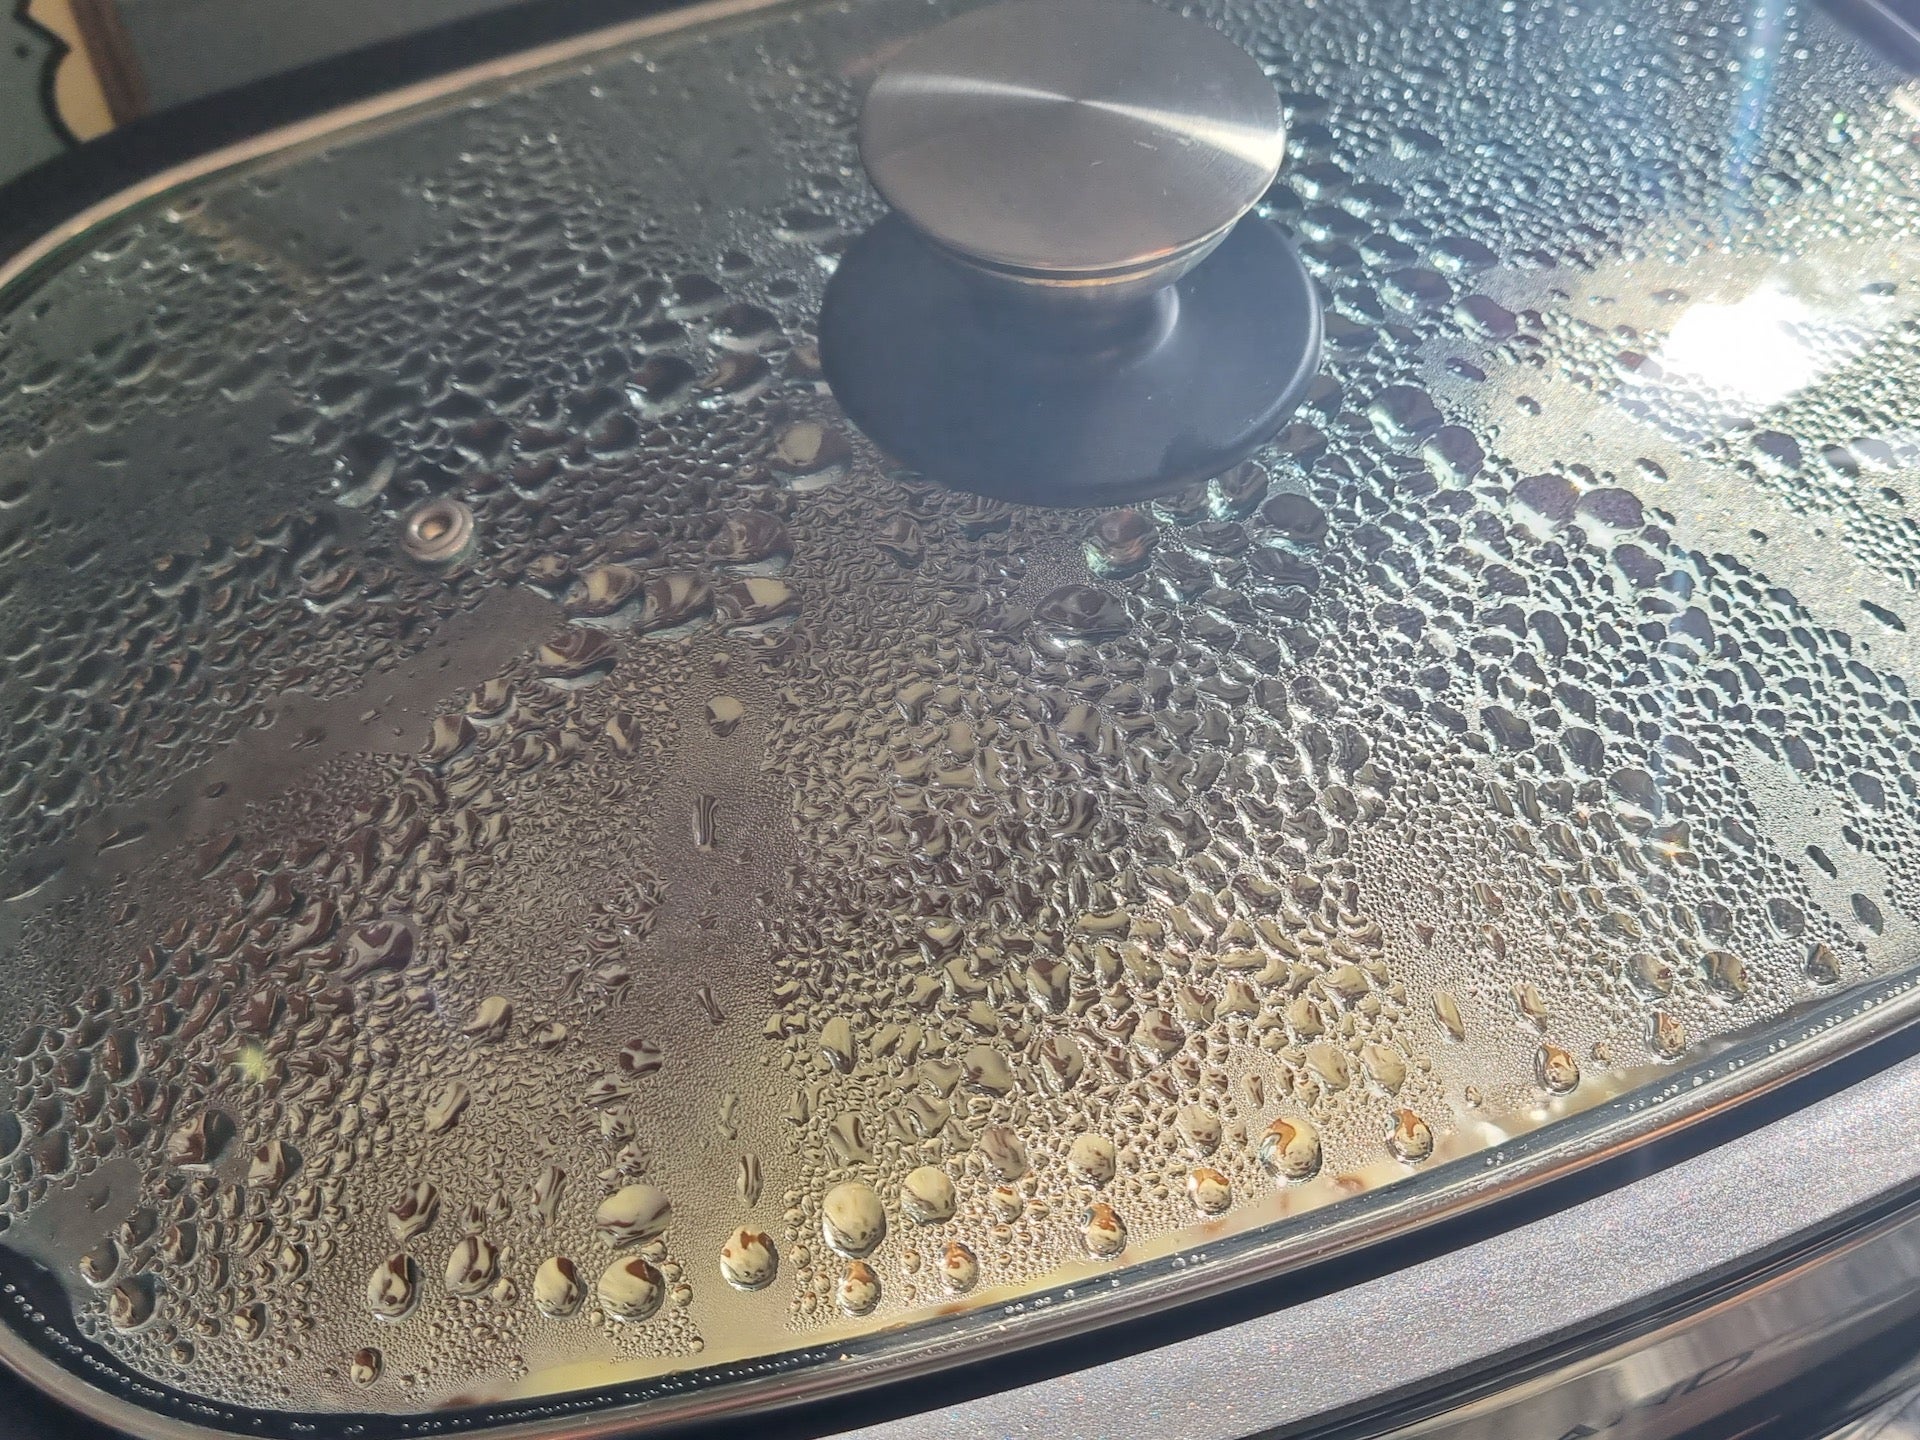 Lakeland 6.5L Searing Slow Cooker condensation